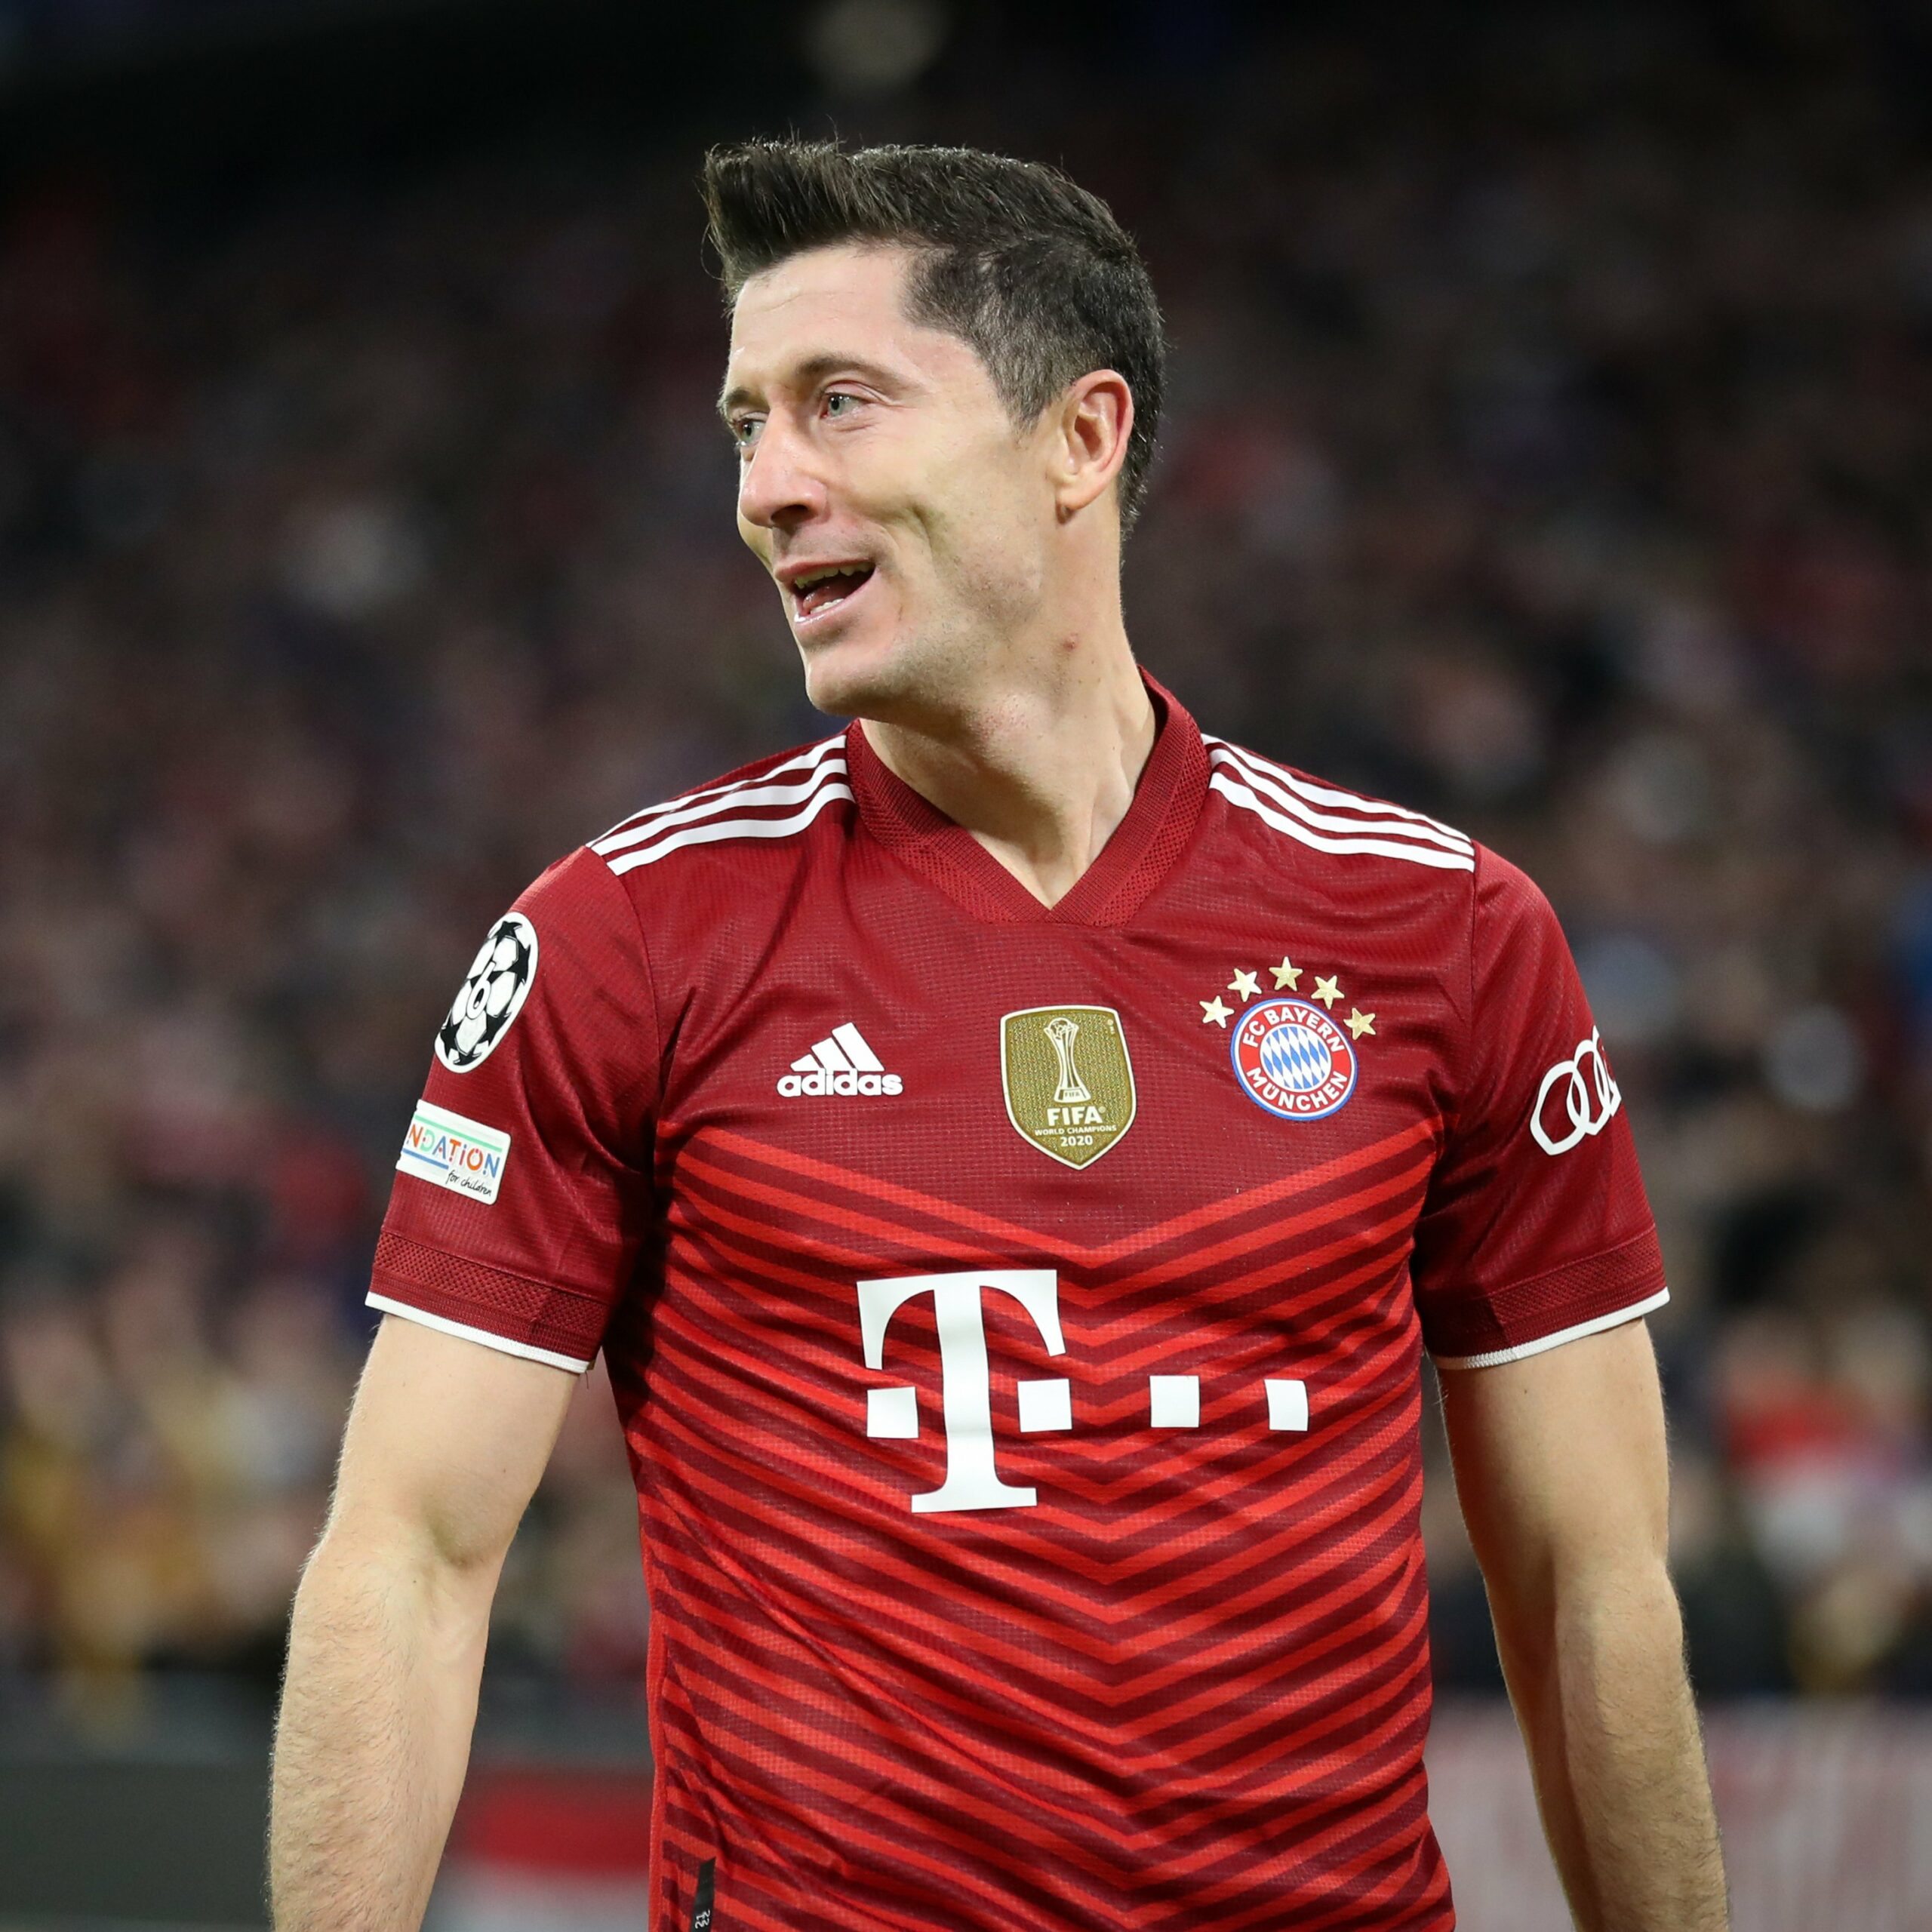 Lewandowslki sorri em partida do Bayern de Munique na Champions League